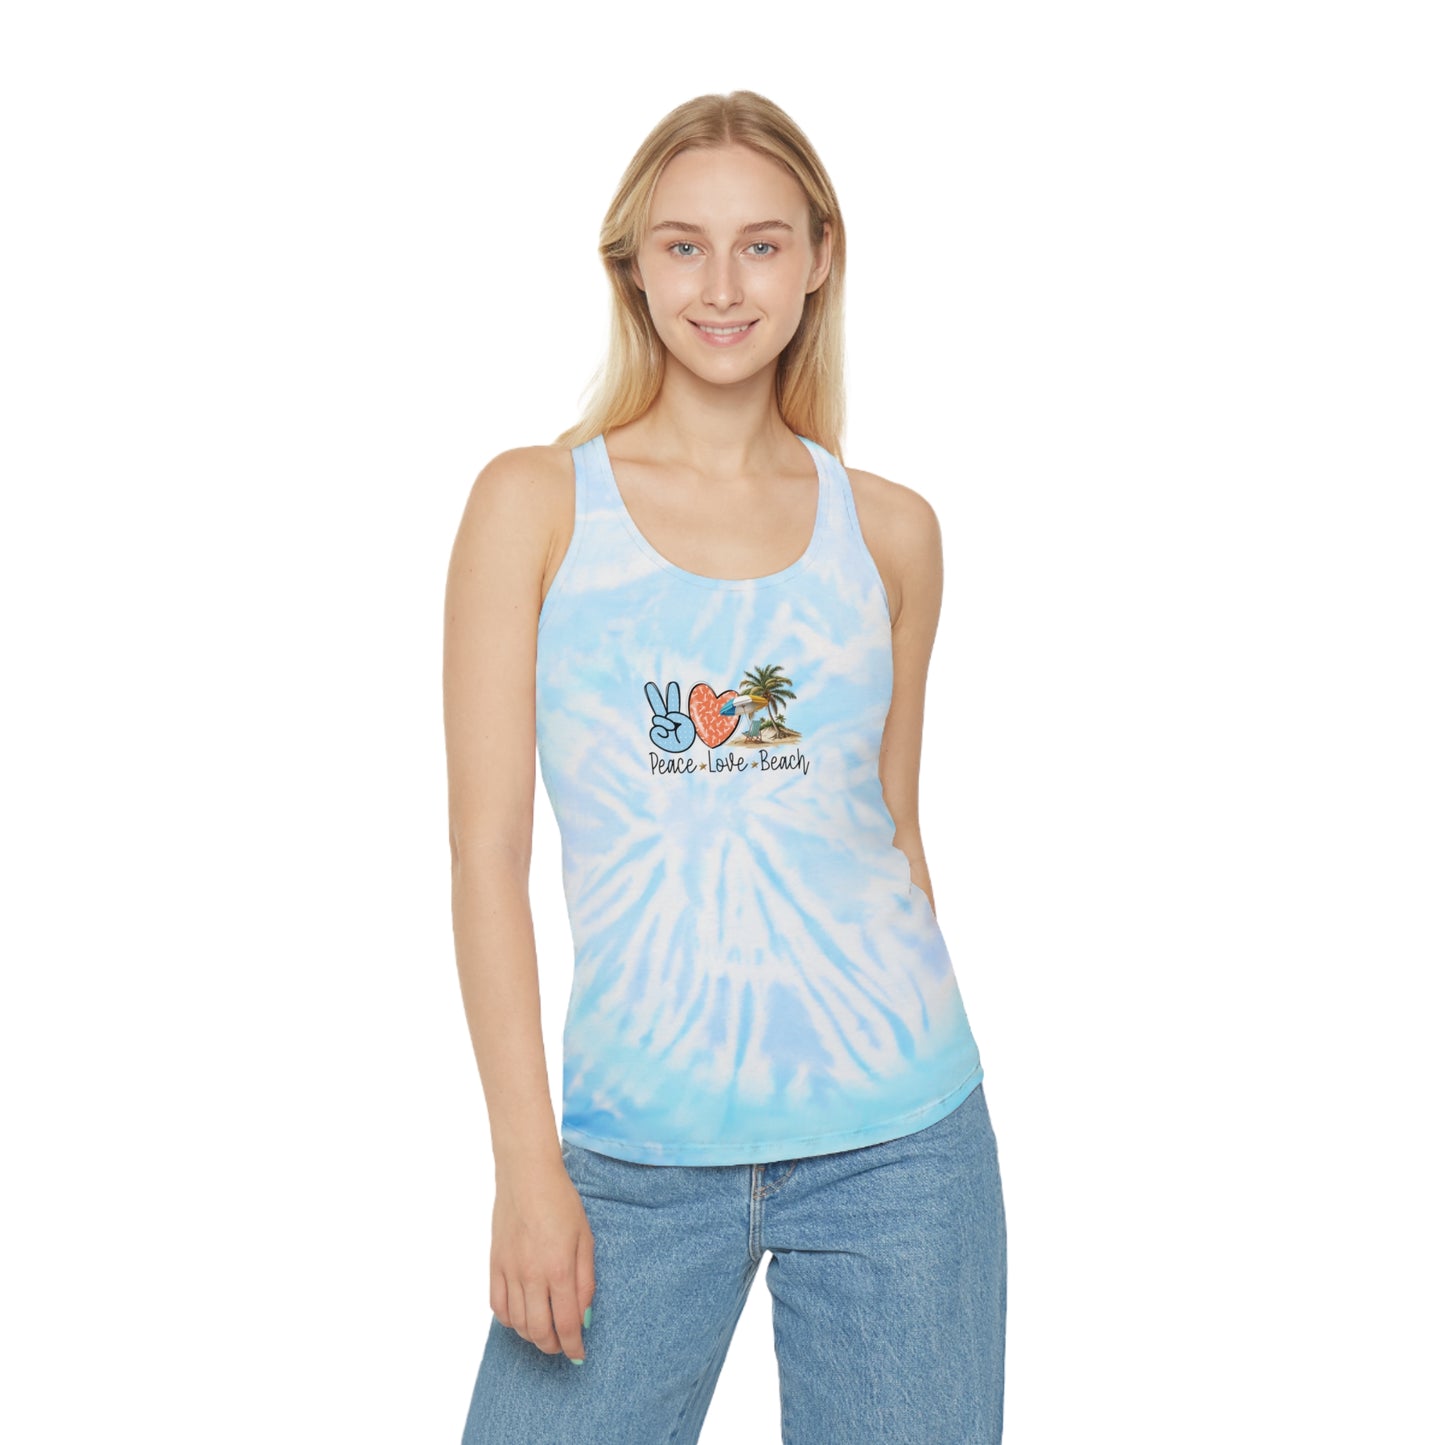 Beach Vacation Shirts Tie Dye Racerback Tank Top Peace Love Beach For Women